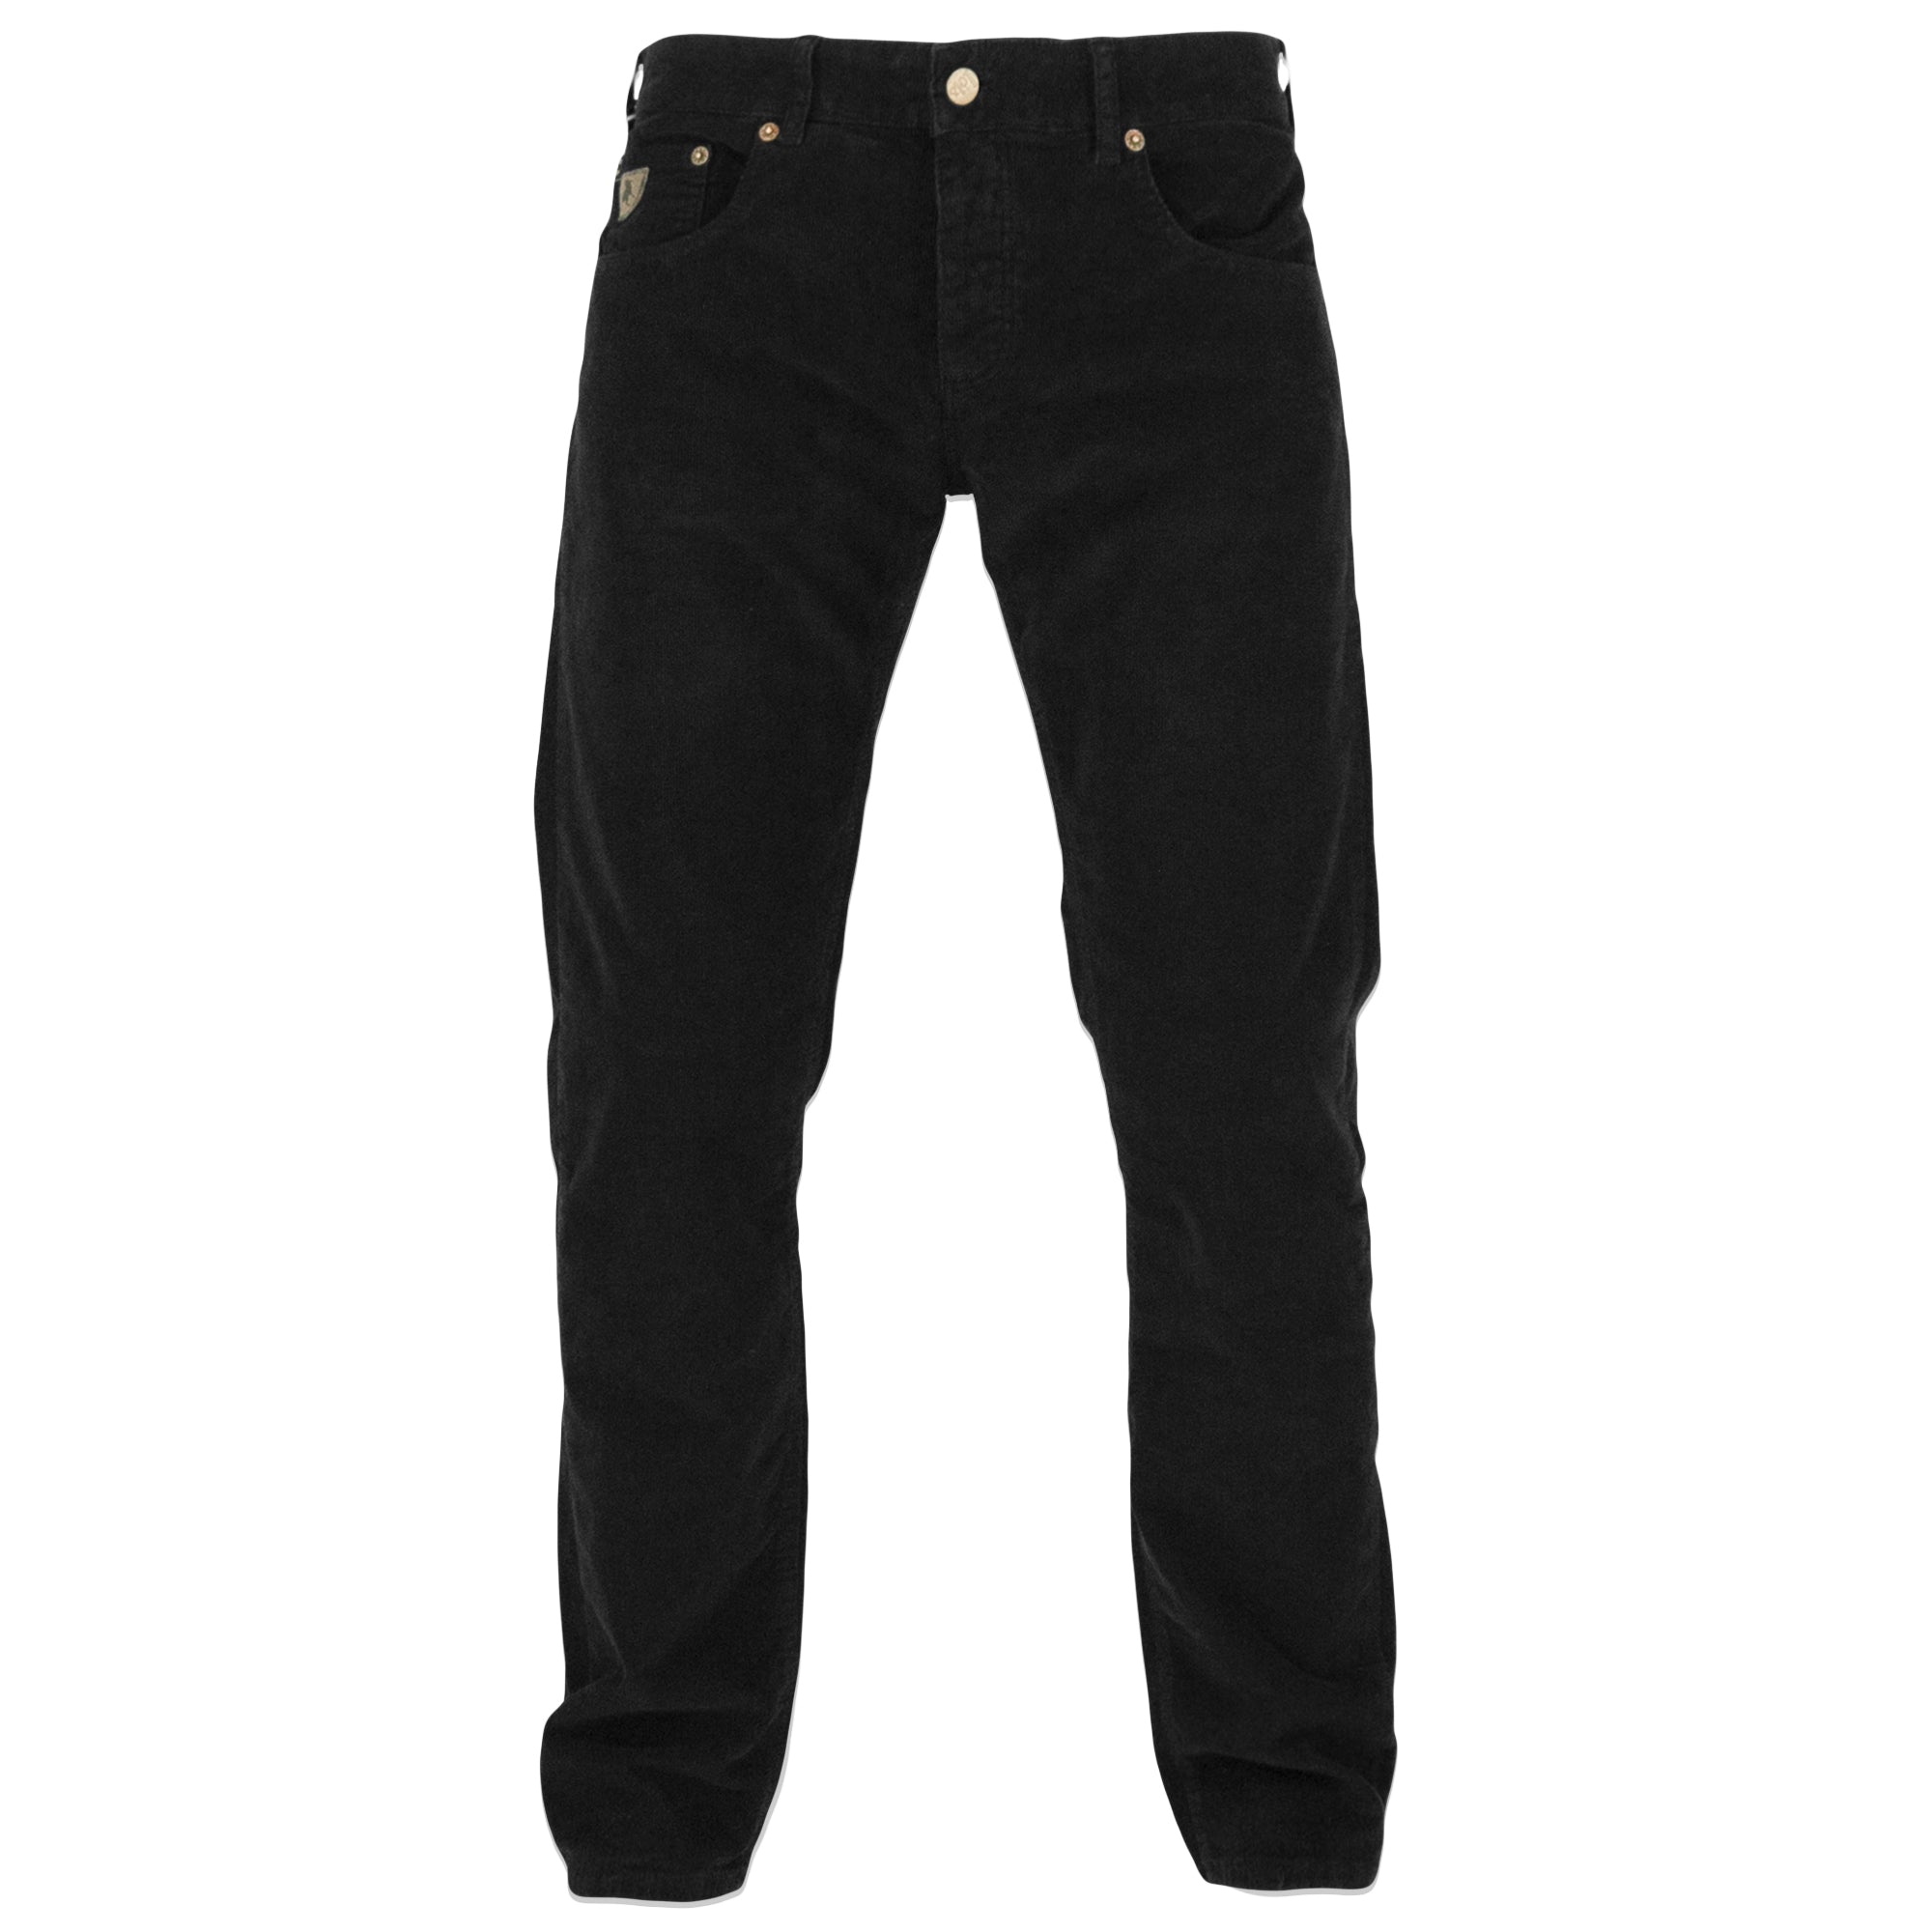 Lois Sierra Needle Cord Trousers - Black